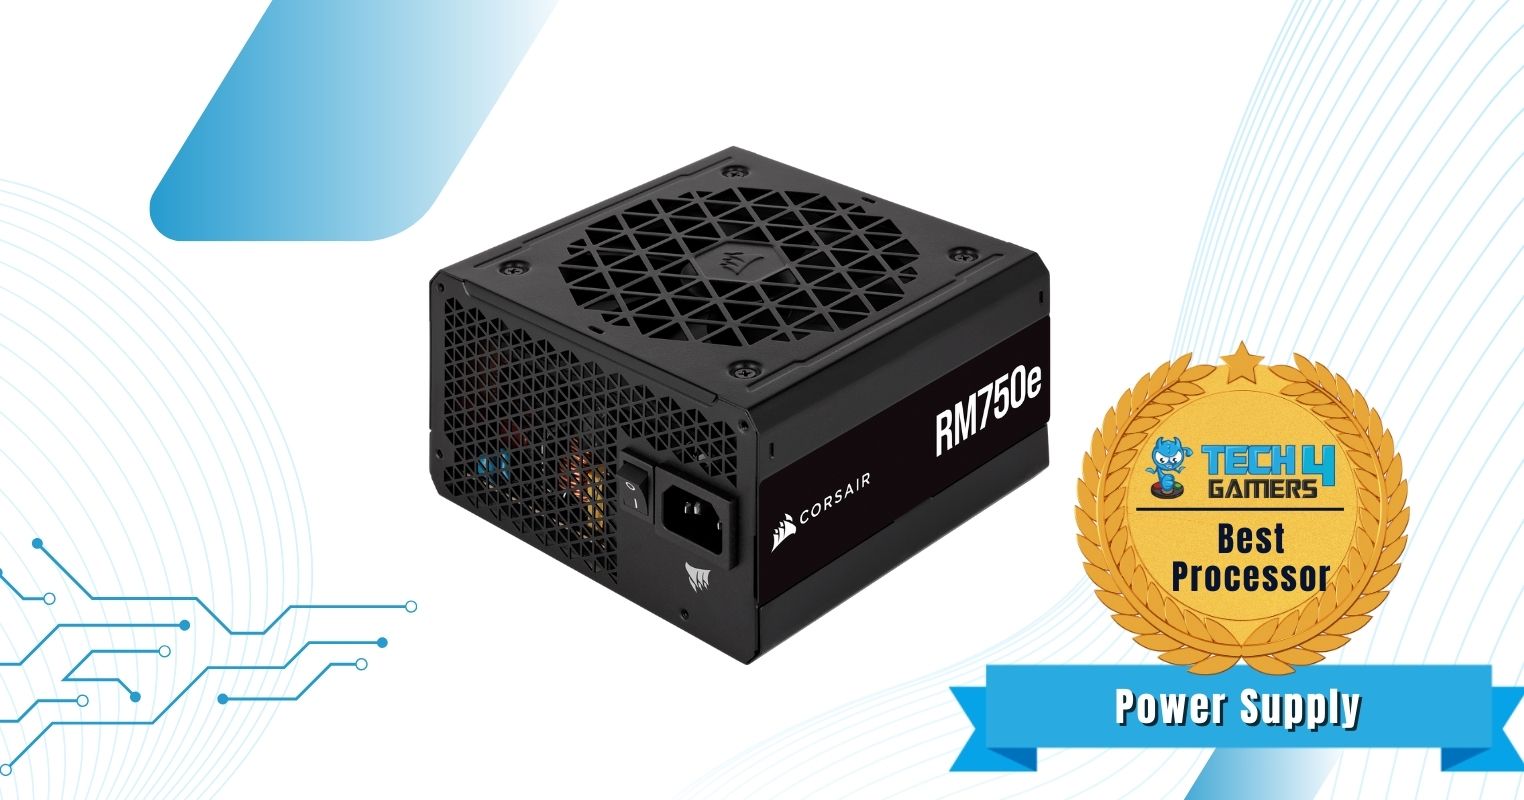 Best $1500 Gaming PC Build Power Supply - Corsair RM750e